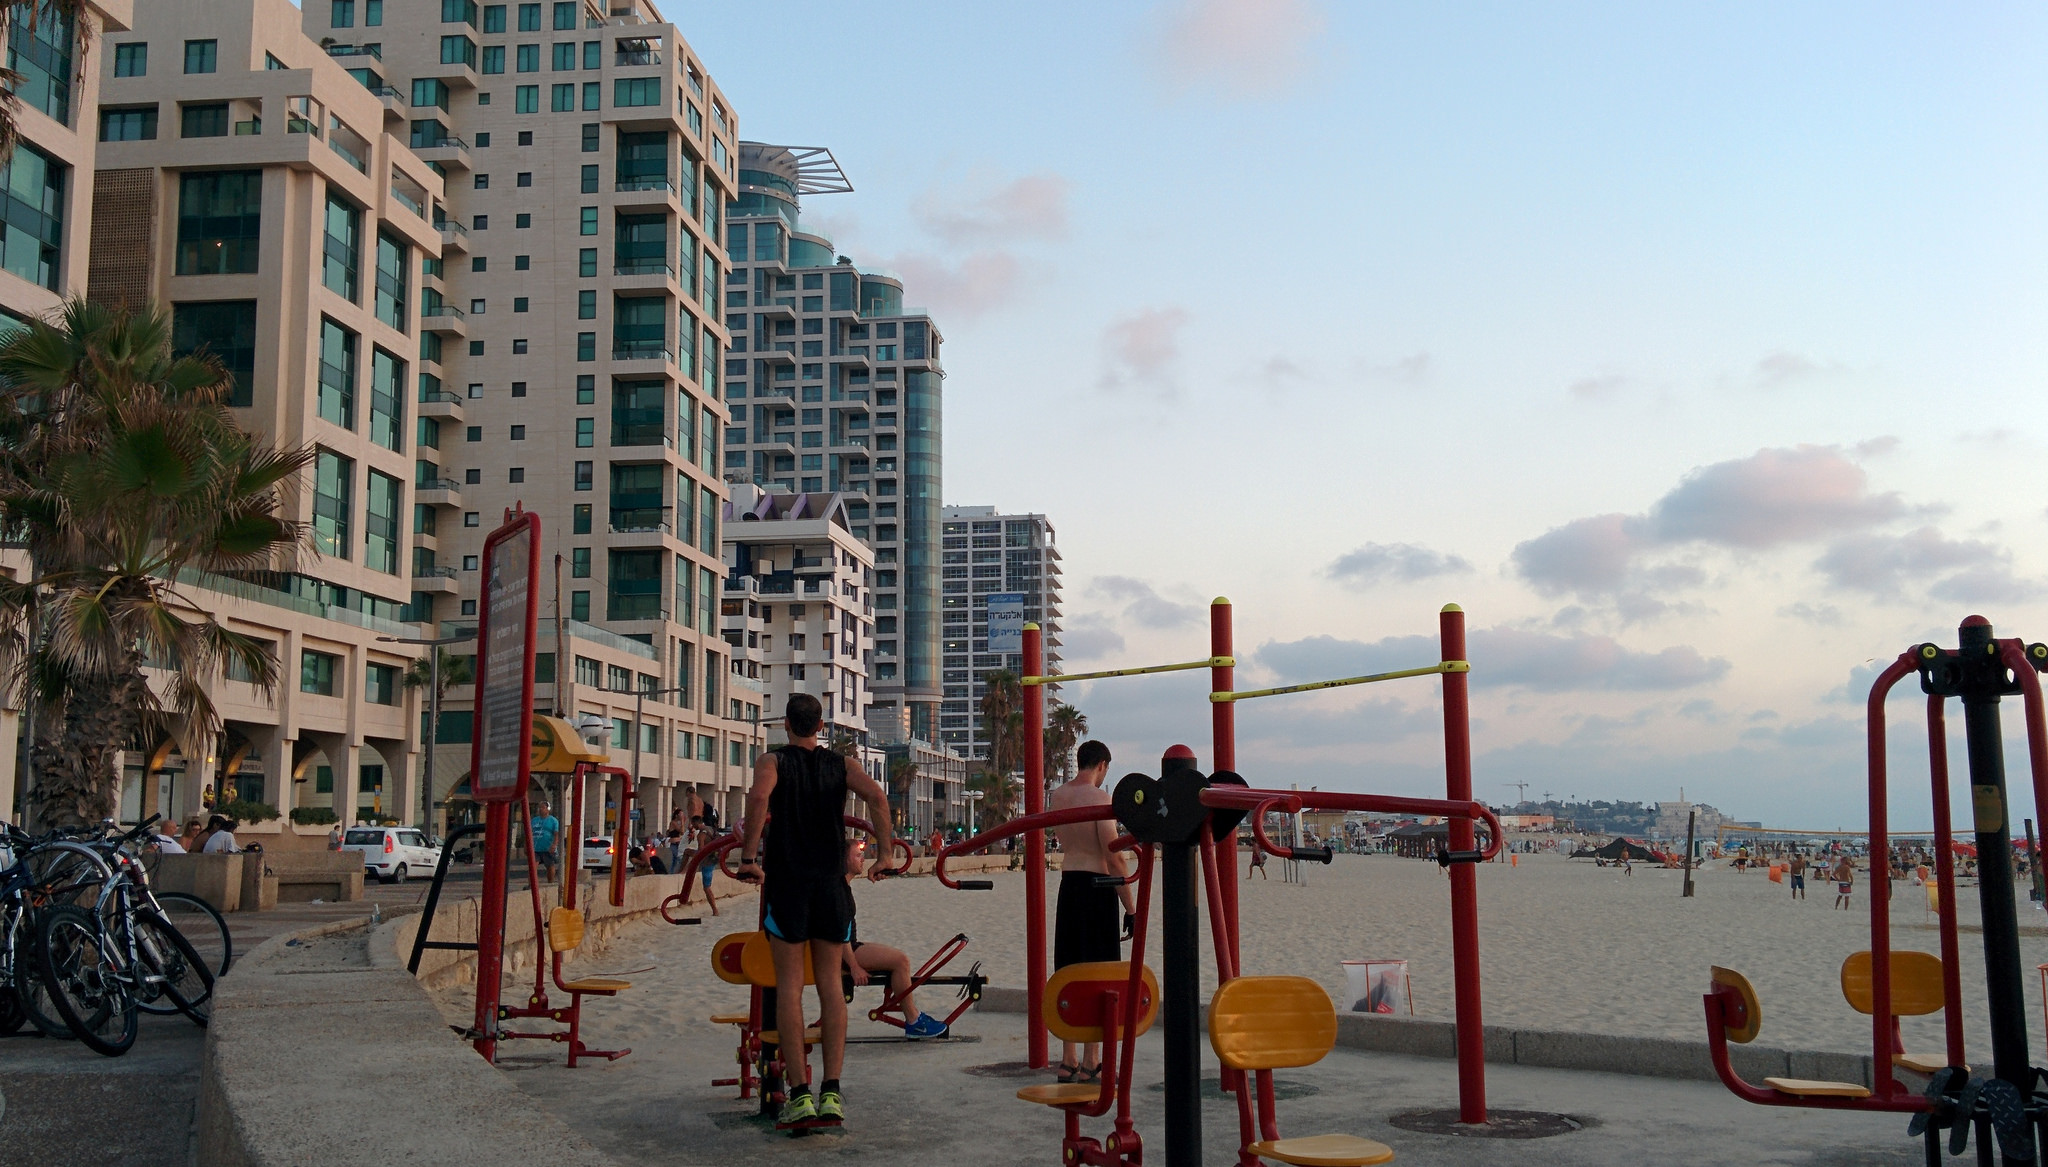 Gym nue in Tel Aviv-Yafo